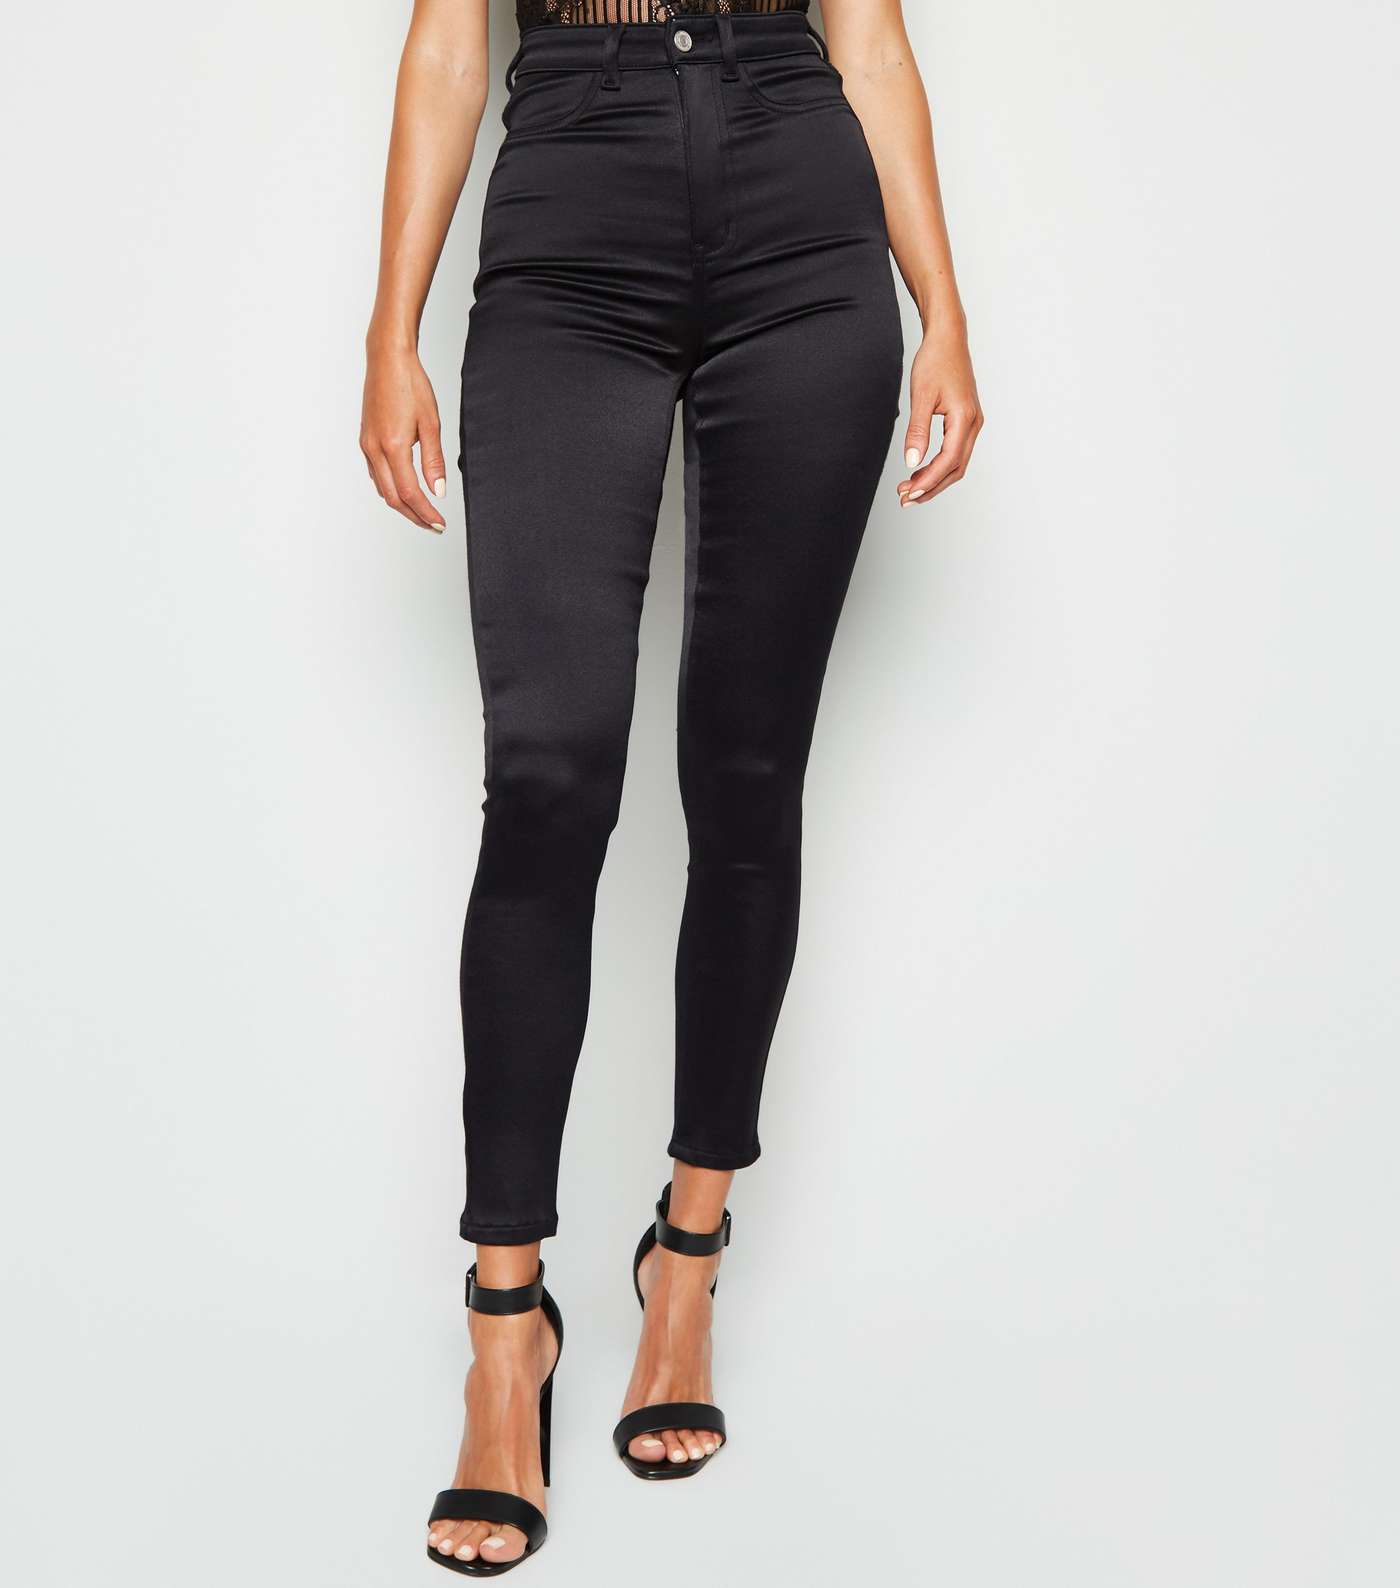 Black Satin High Waist Super Skinny Jeans Image 2